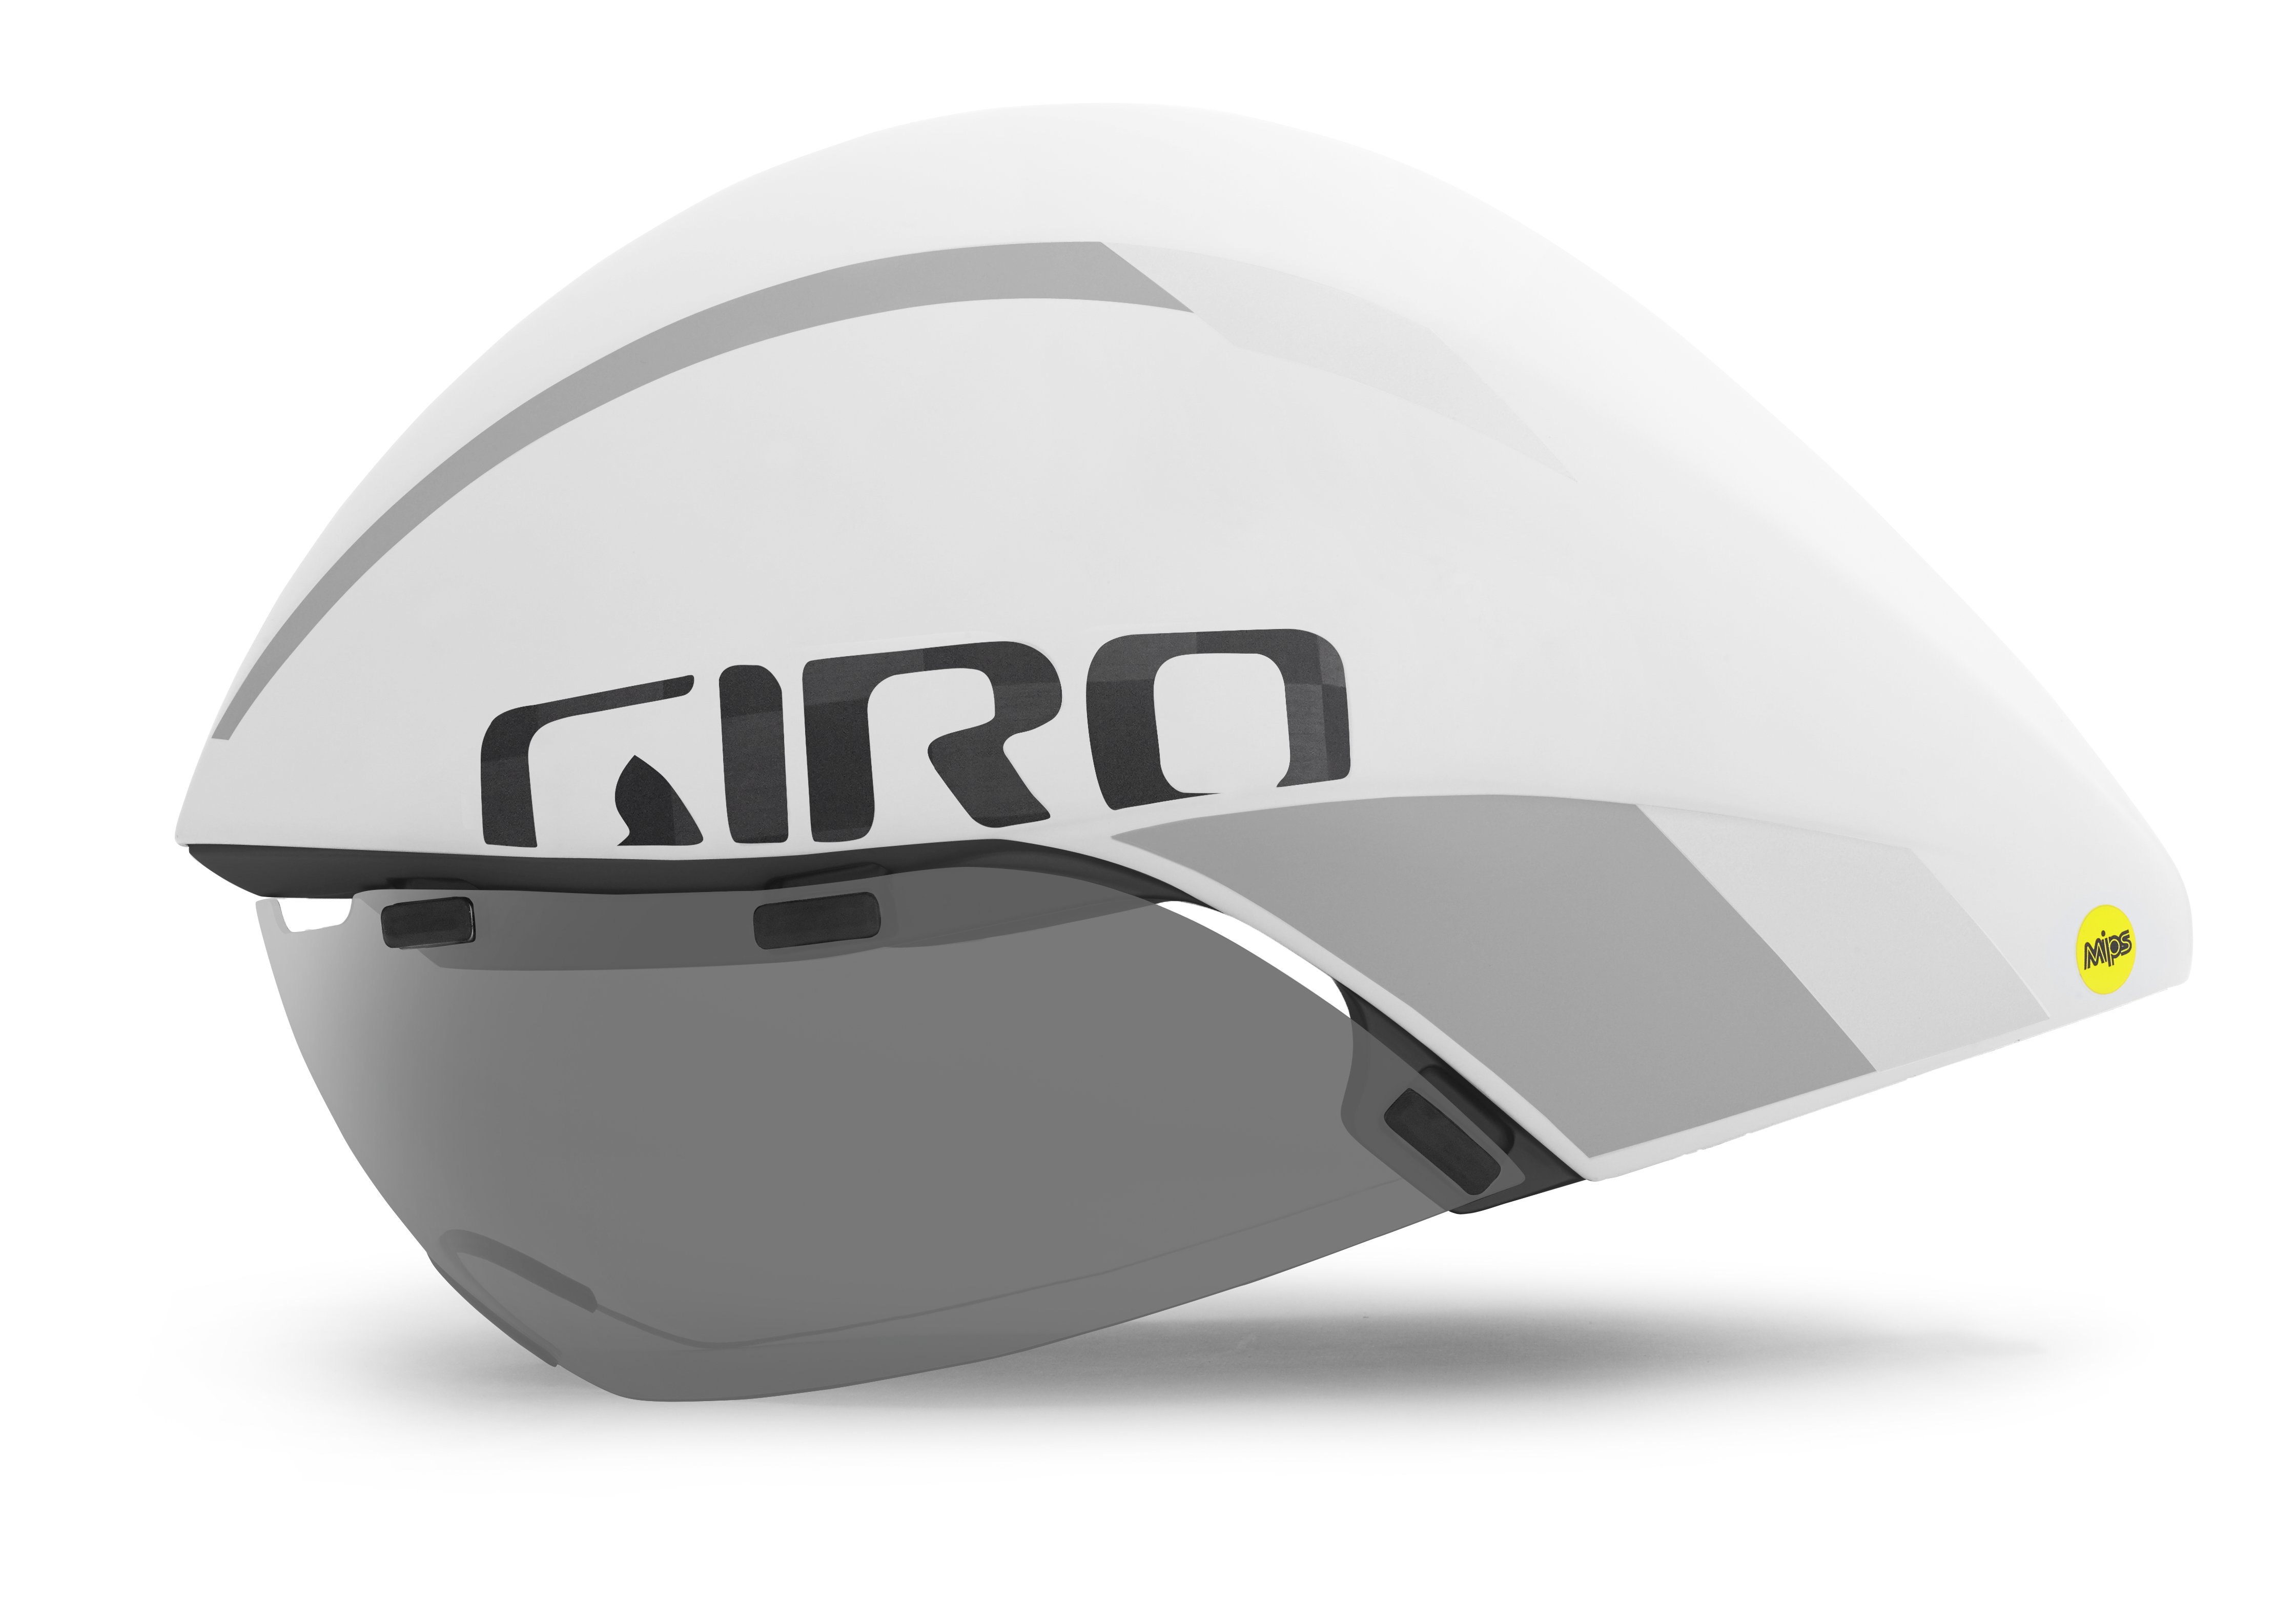 Aerohead und Aerohead Ultimate: Giros neue Schutzgeschosse